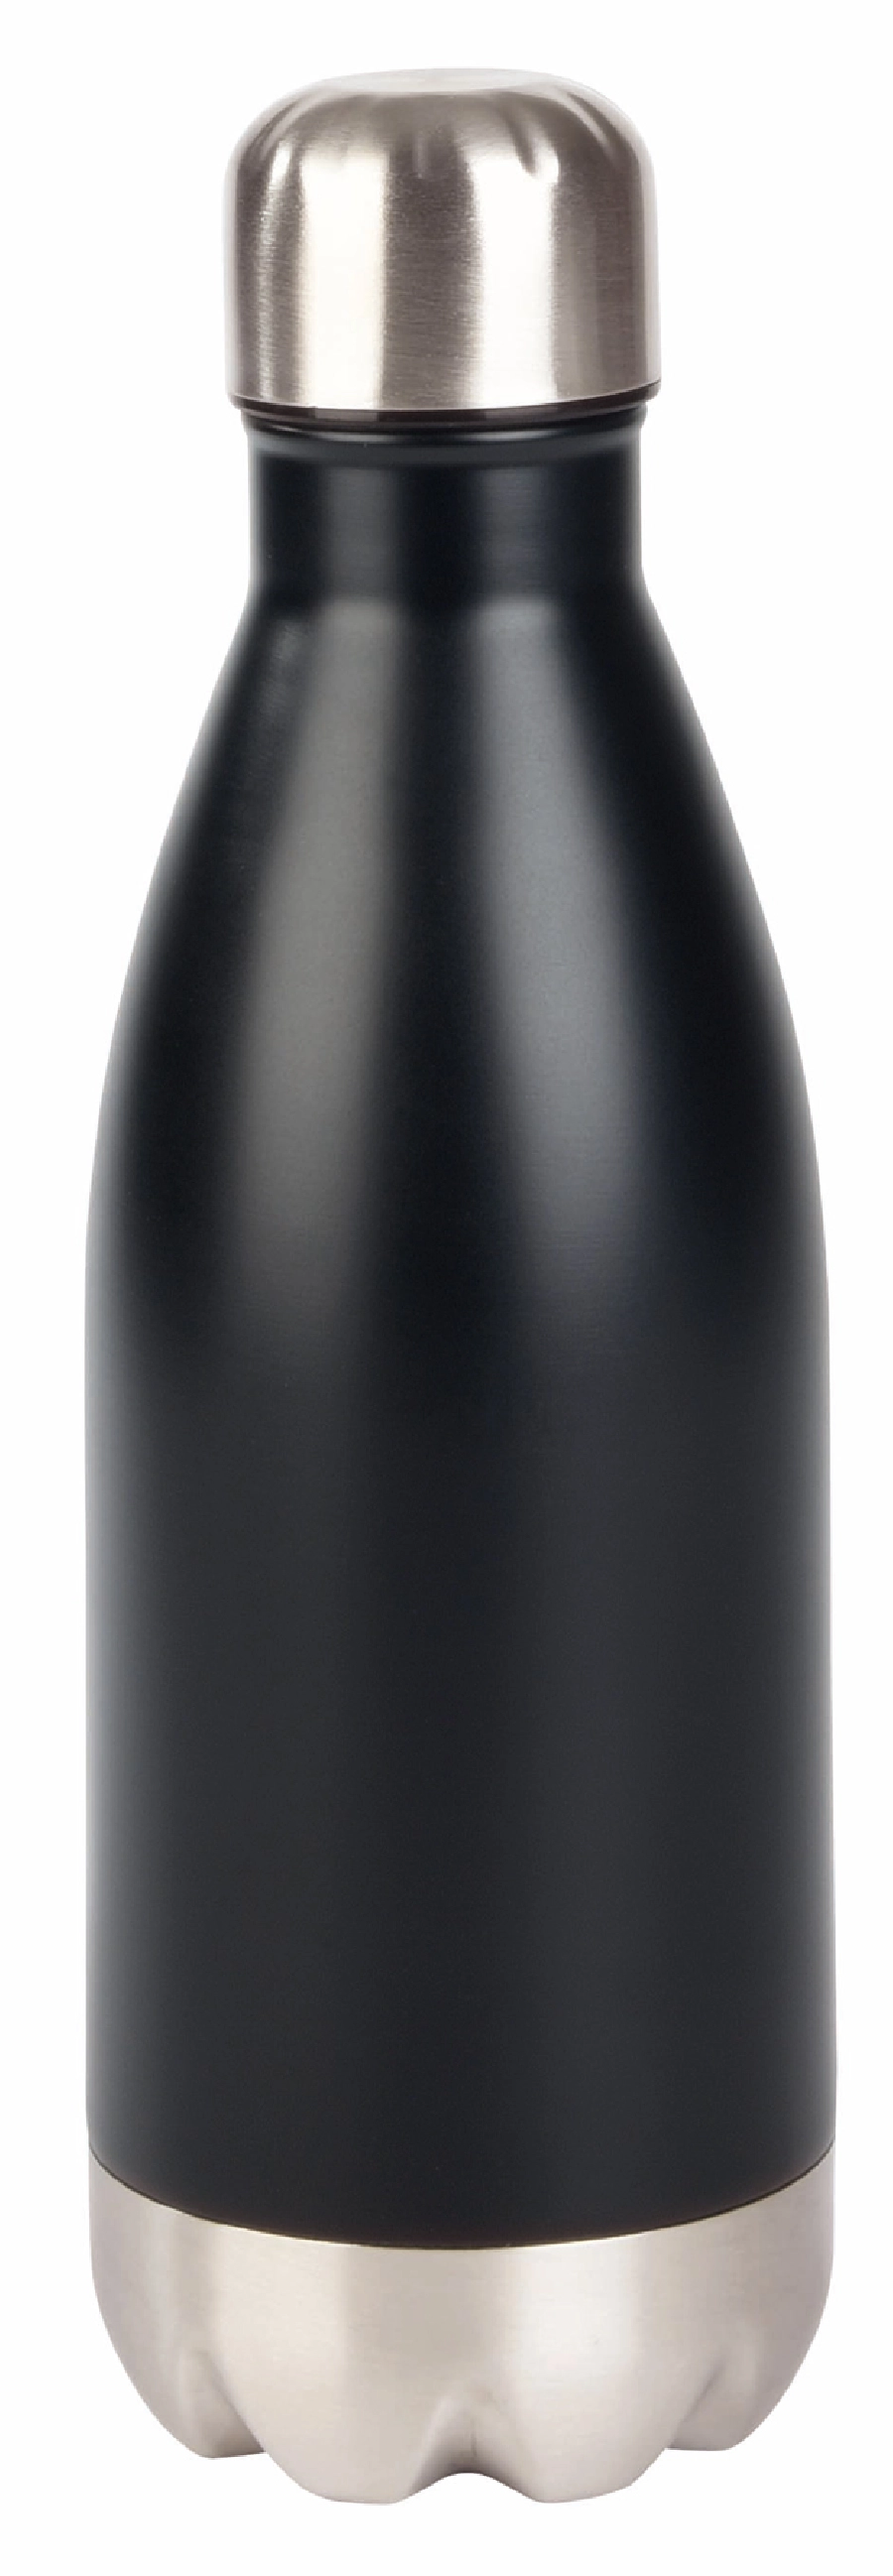 Butelka stalowa PARKY, czarny, srebrny 56-0304502